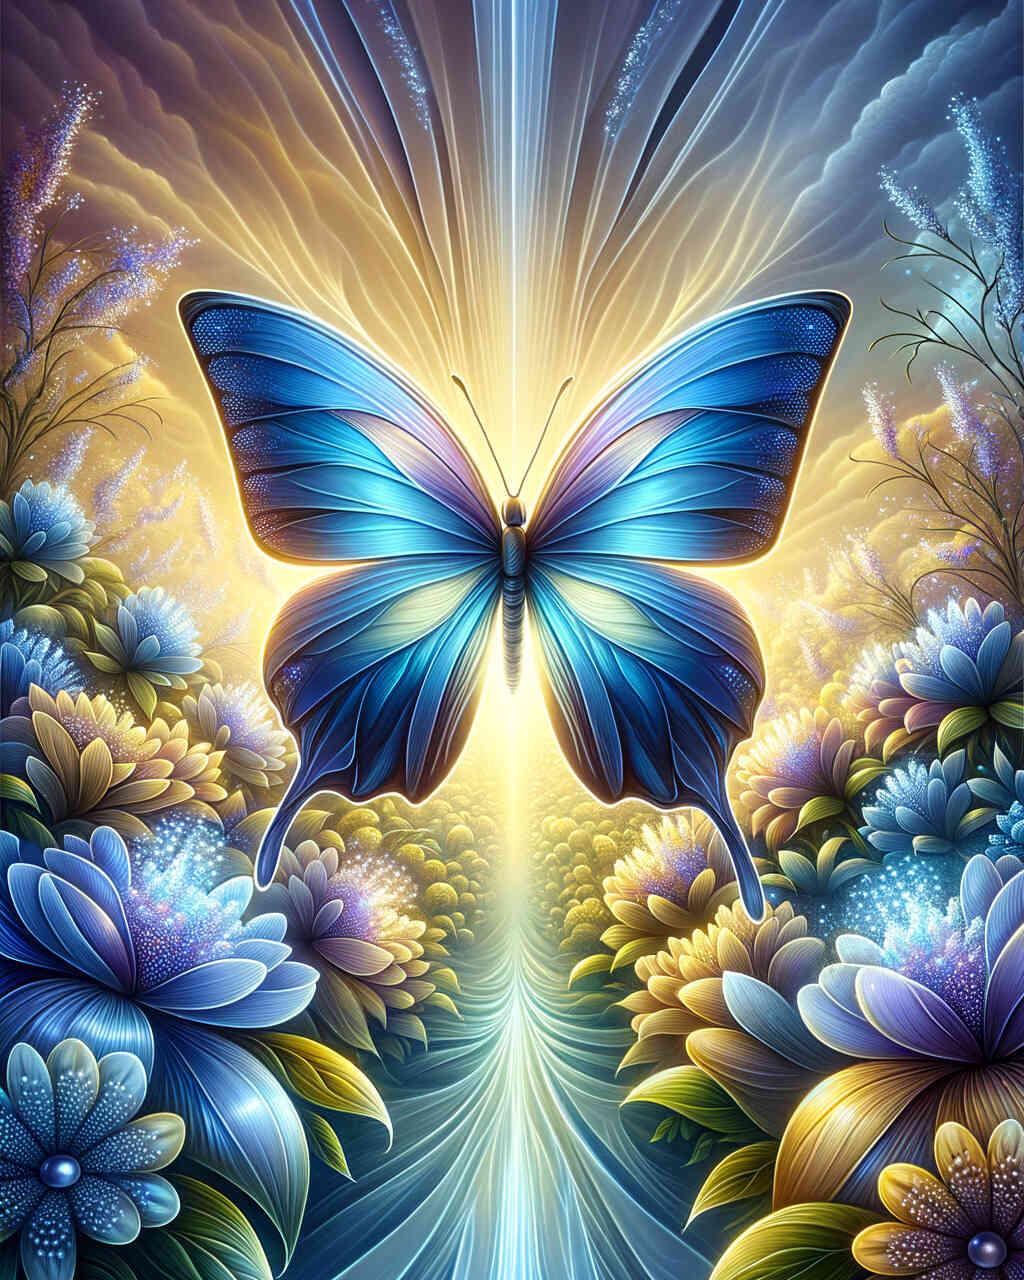 Diamond Painting - Blauer Schmetterling lange Flügel